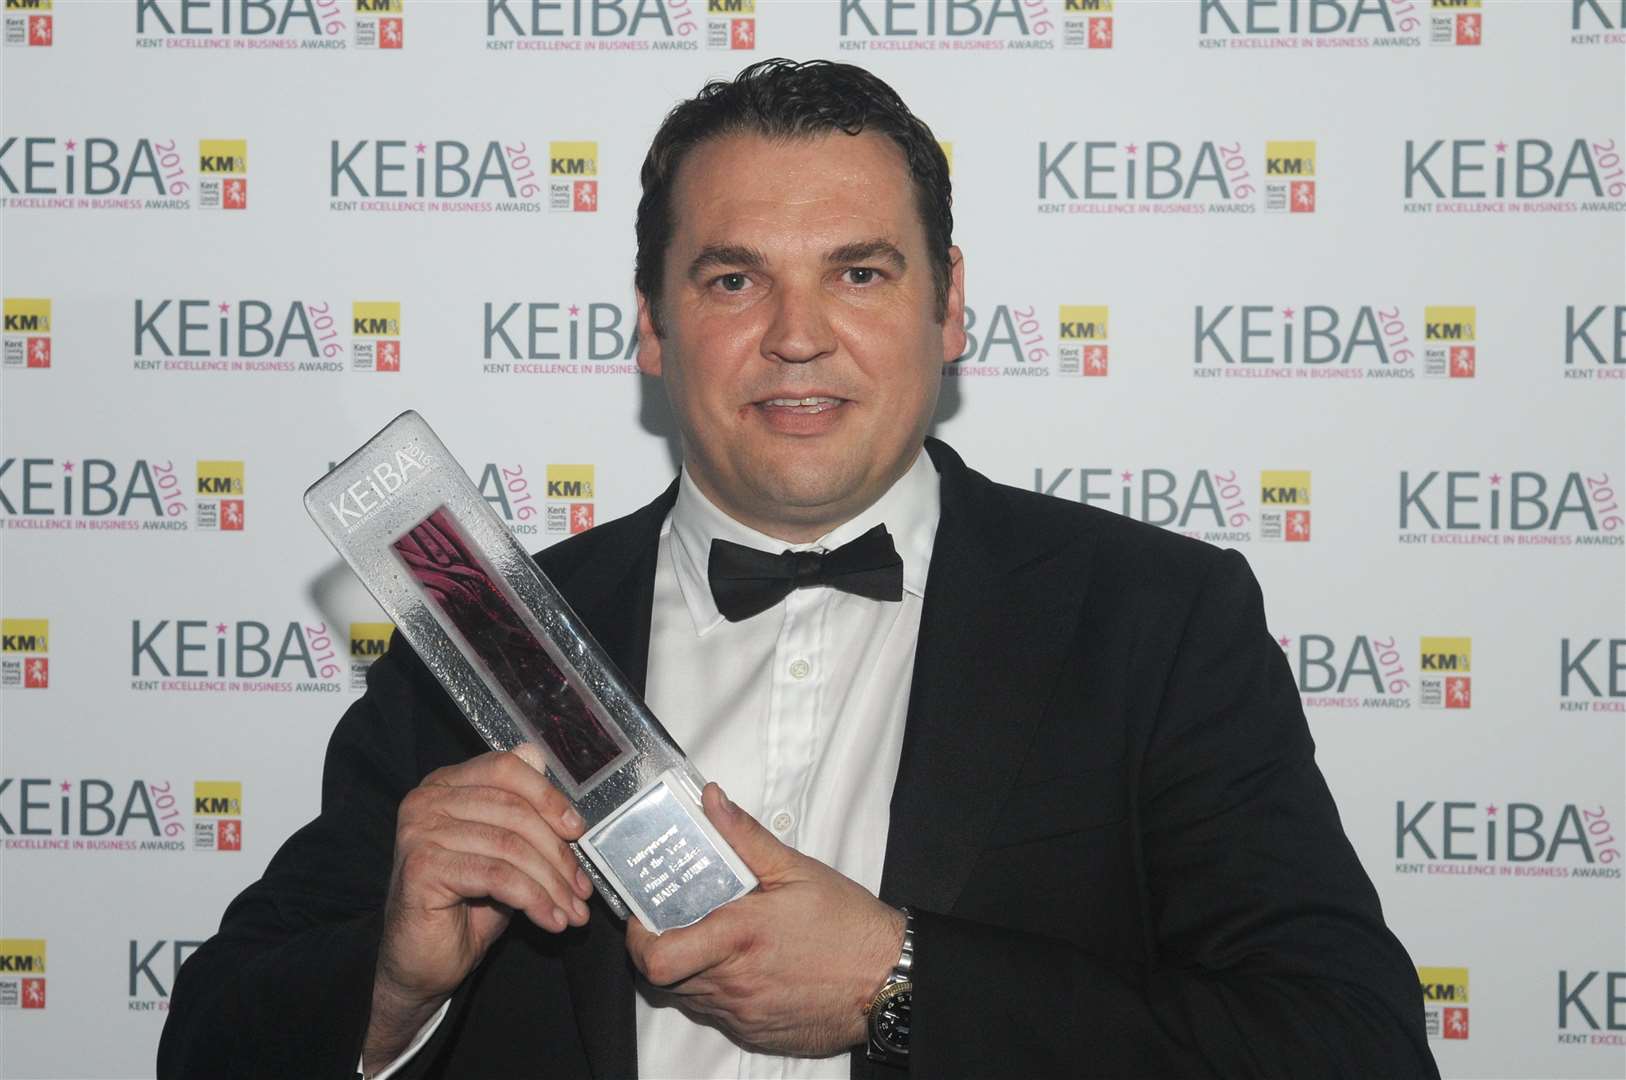 Mark Quinn won Entrepreneur of the Year